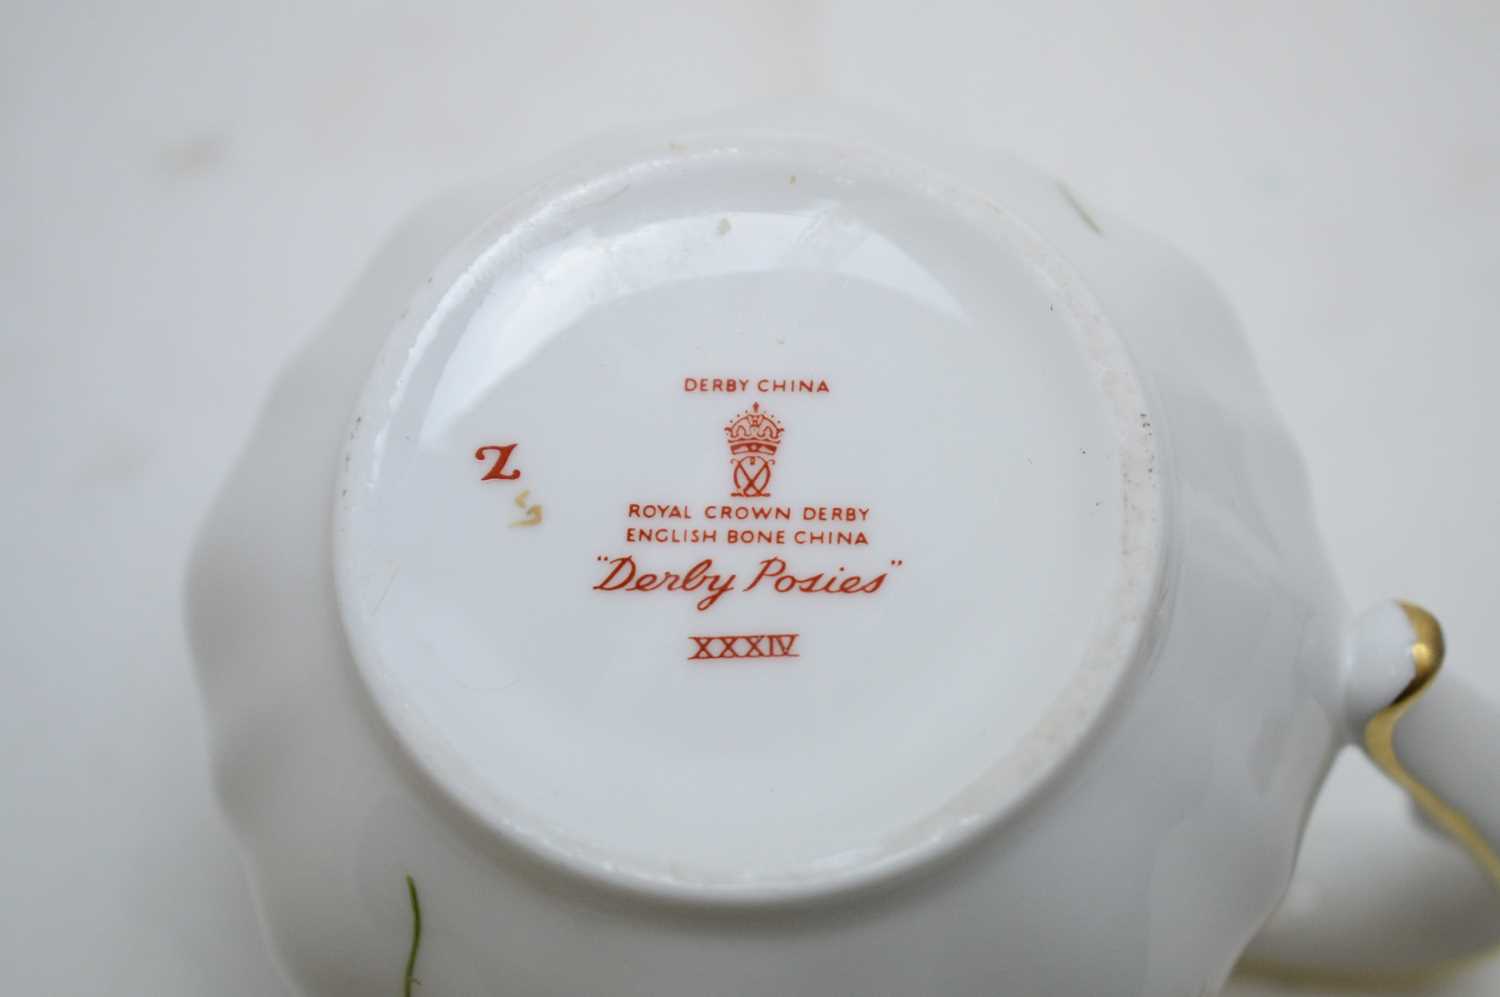 Lot 209 - Royal Crown Derby and Royal Doulton ceramics.